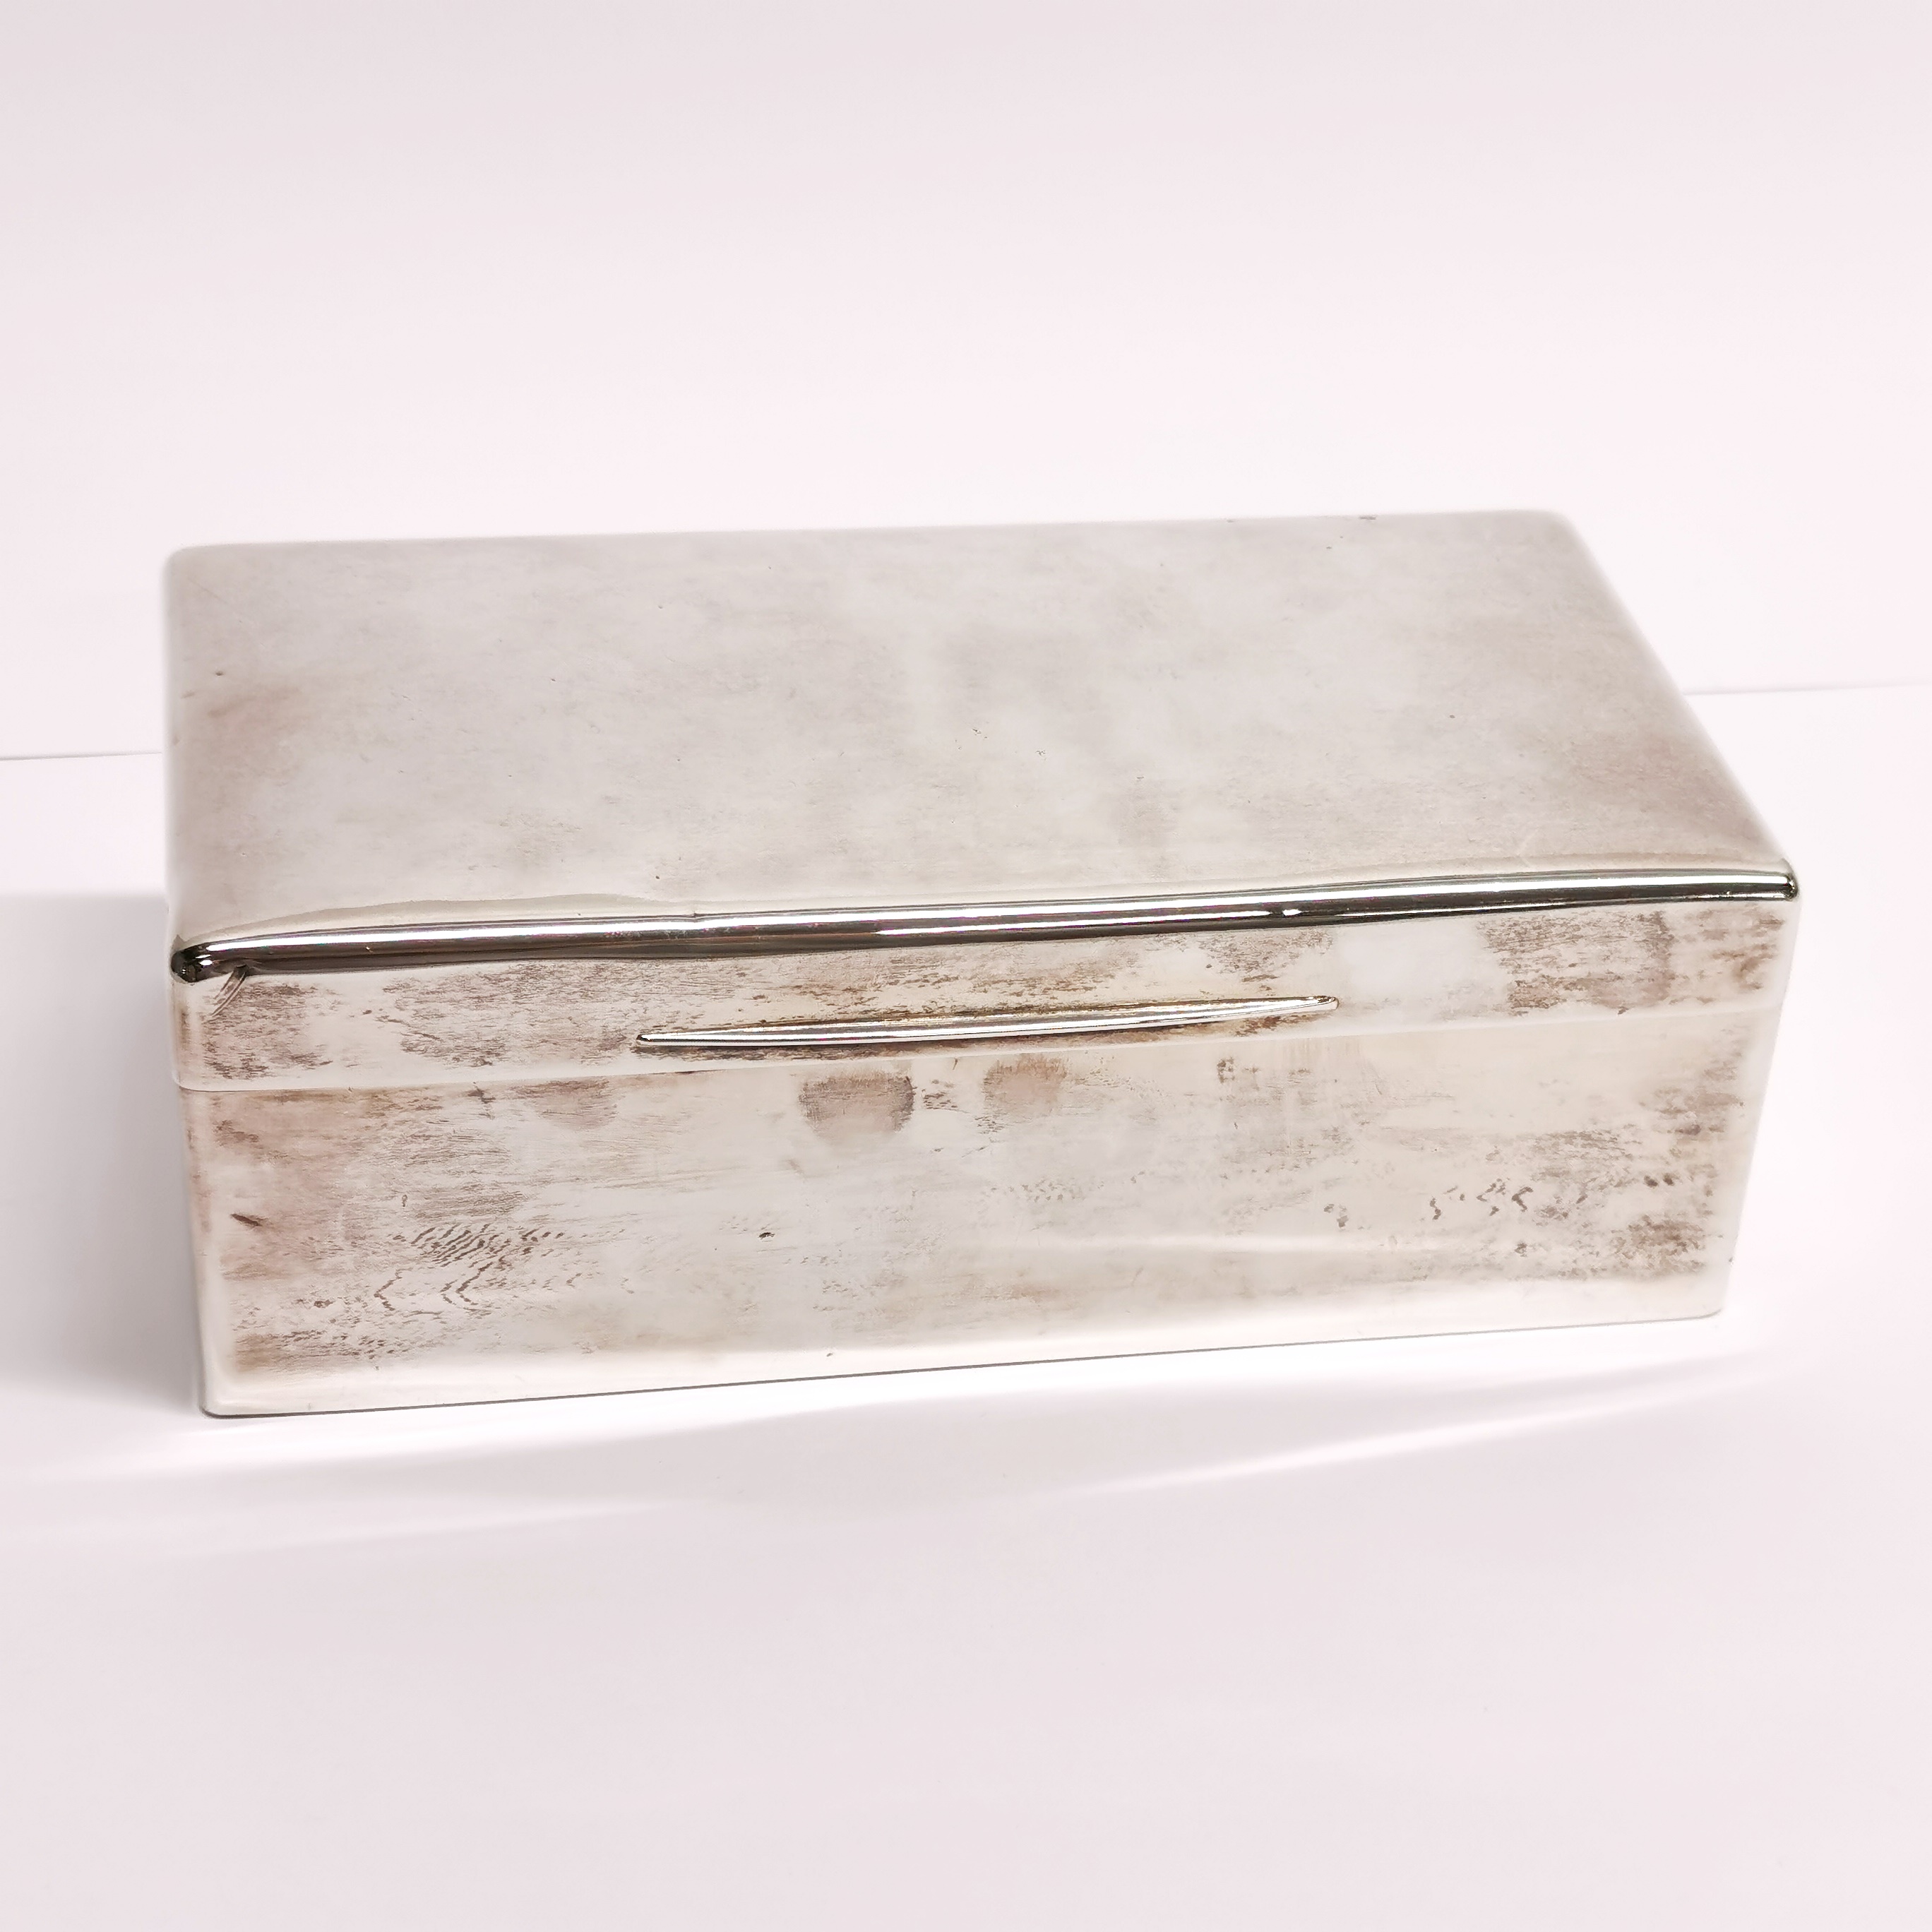 A large hallmarked silver cigarette box, 20 x 11 x 7cm.